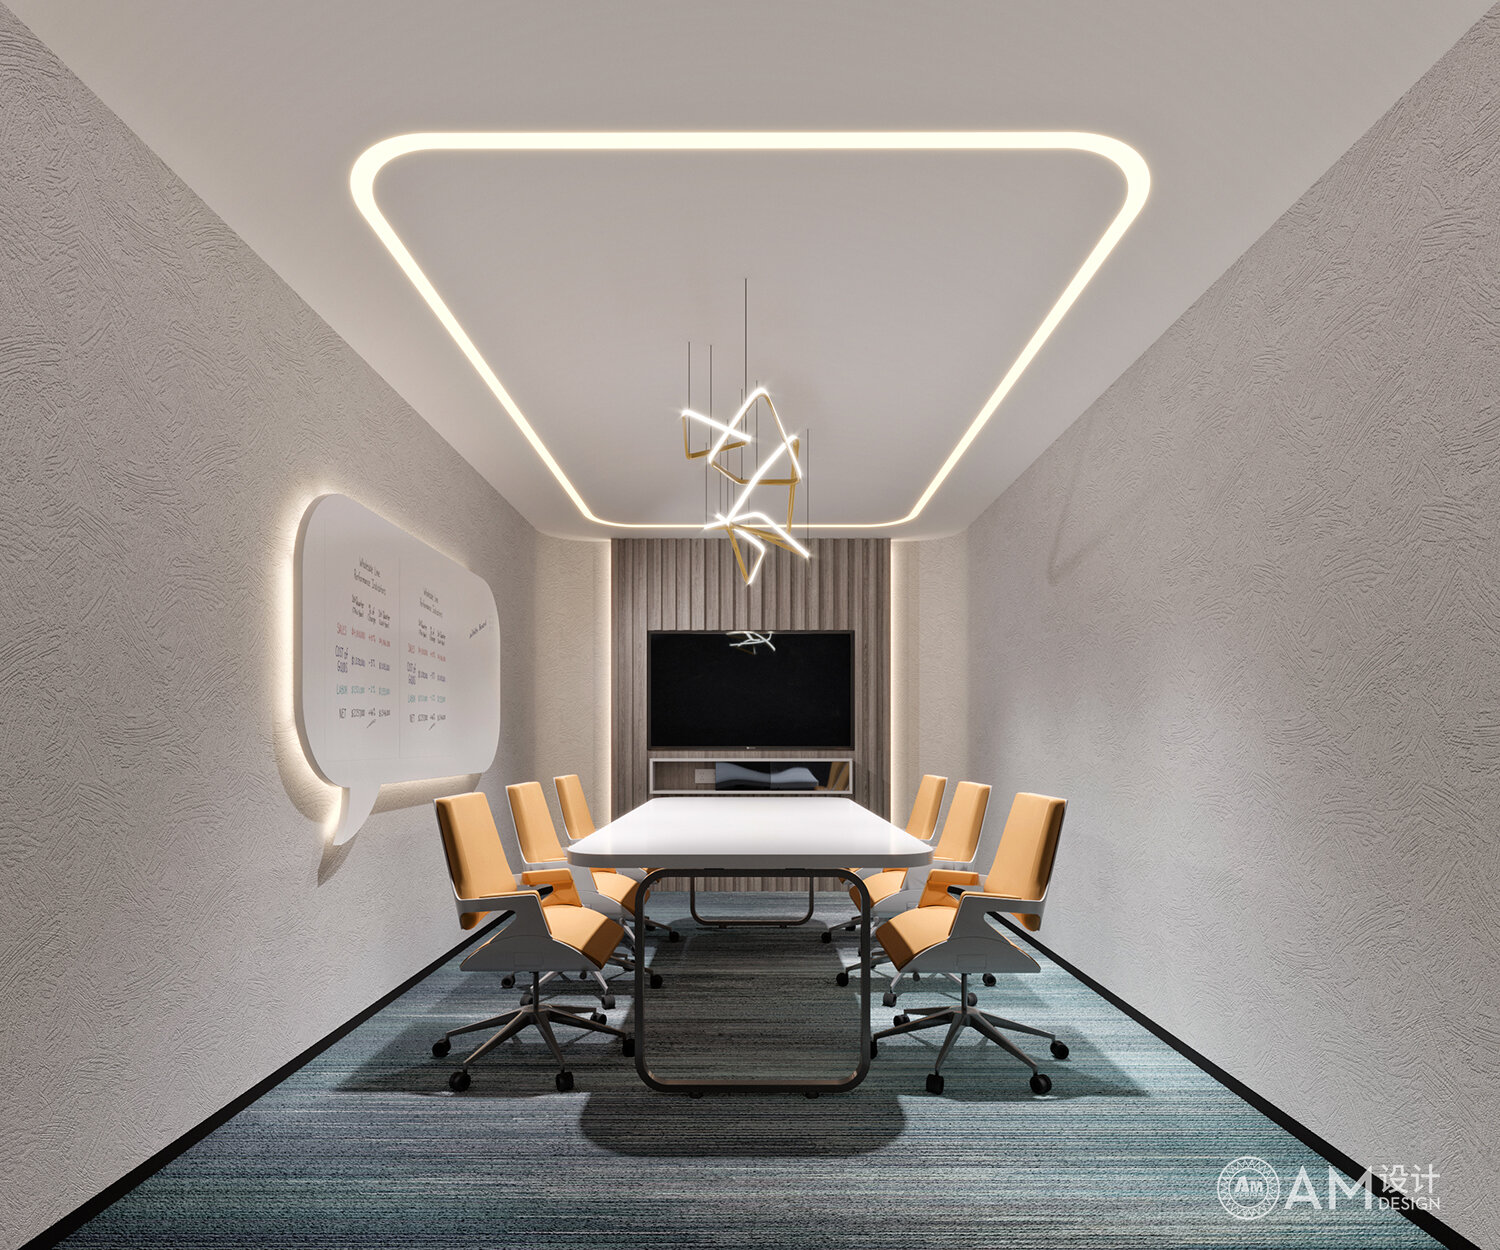 AM DESIGN | LOFT meeting room design of Beijing Jianling Siyu Internet Company